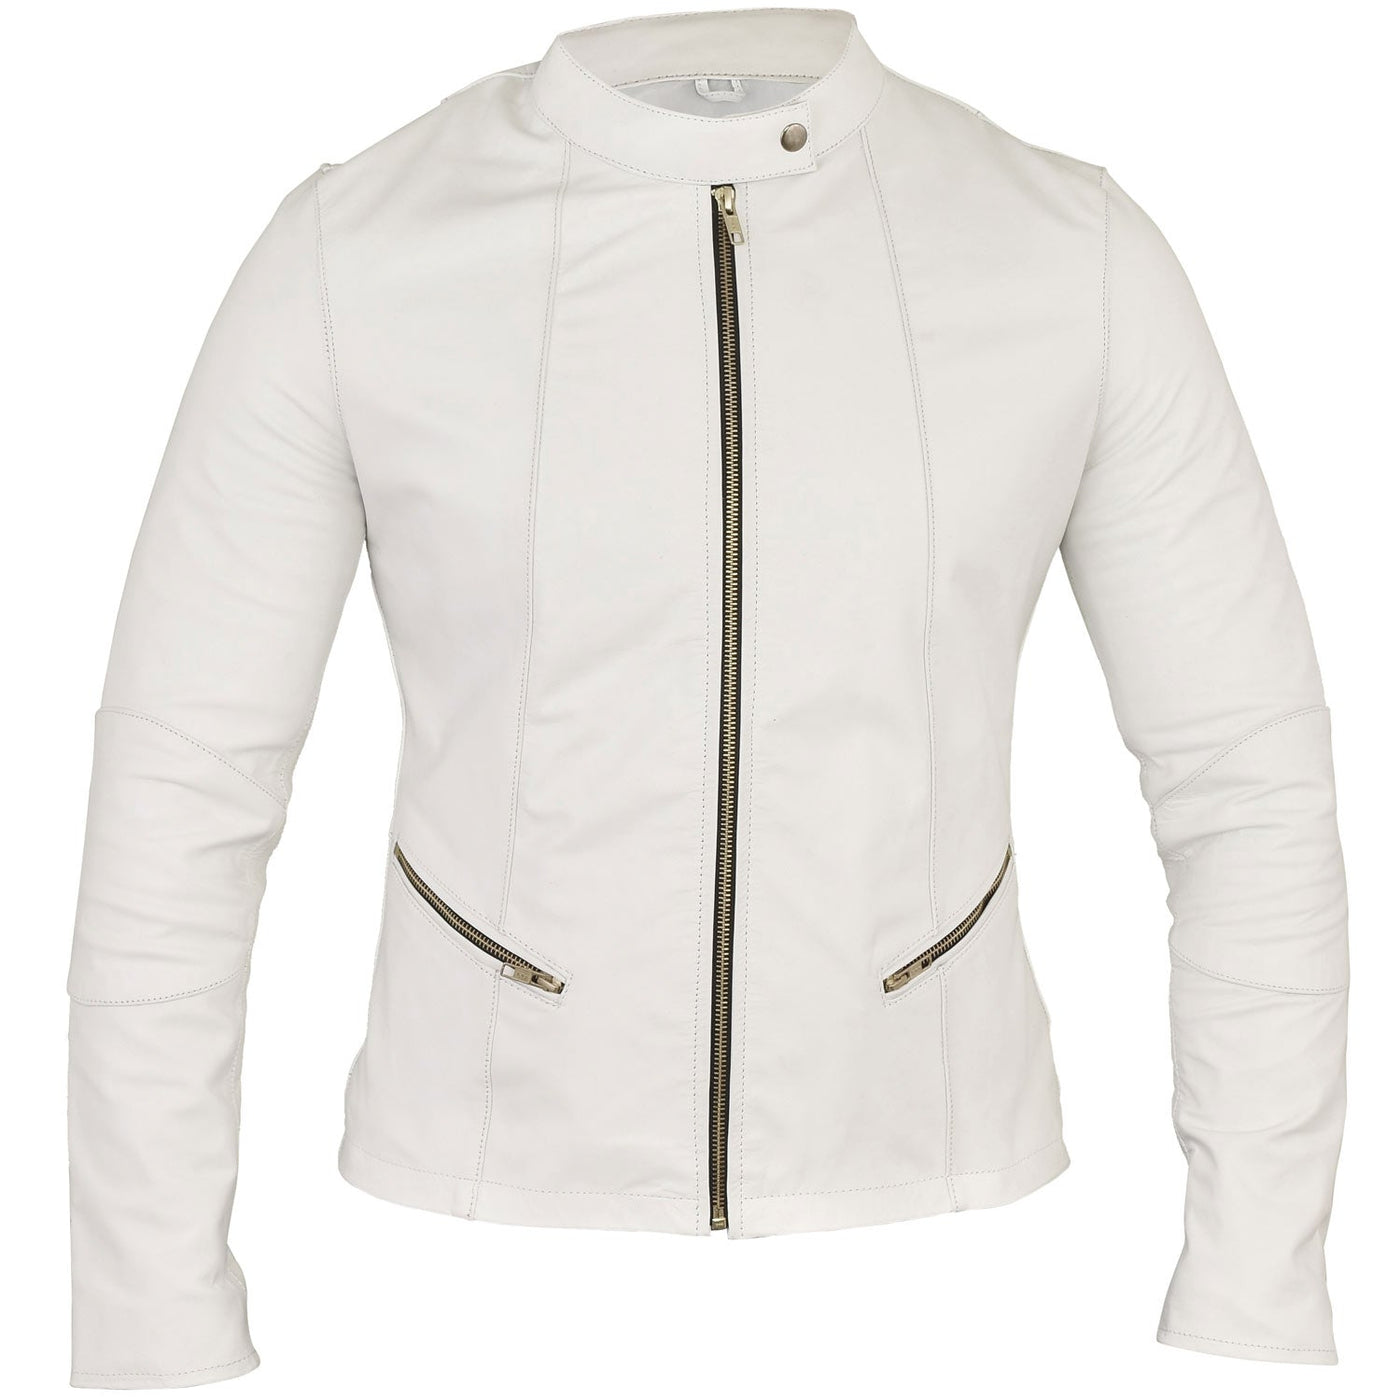 Sophia White Leather Jacket with Gold Hardware Front